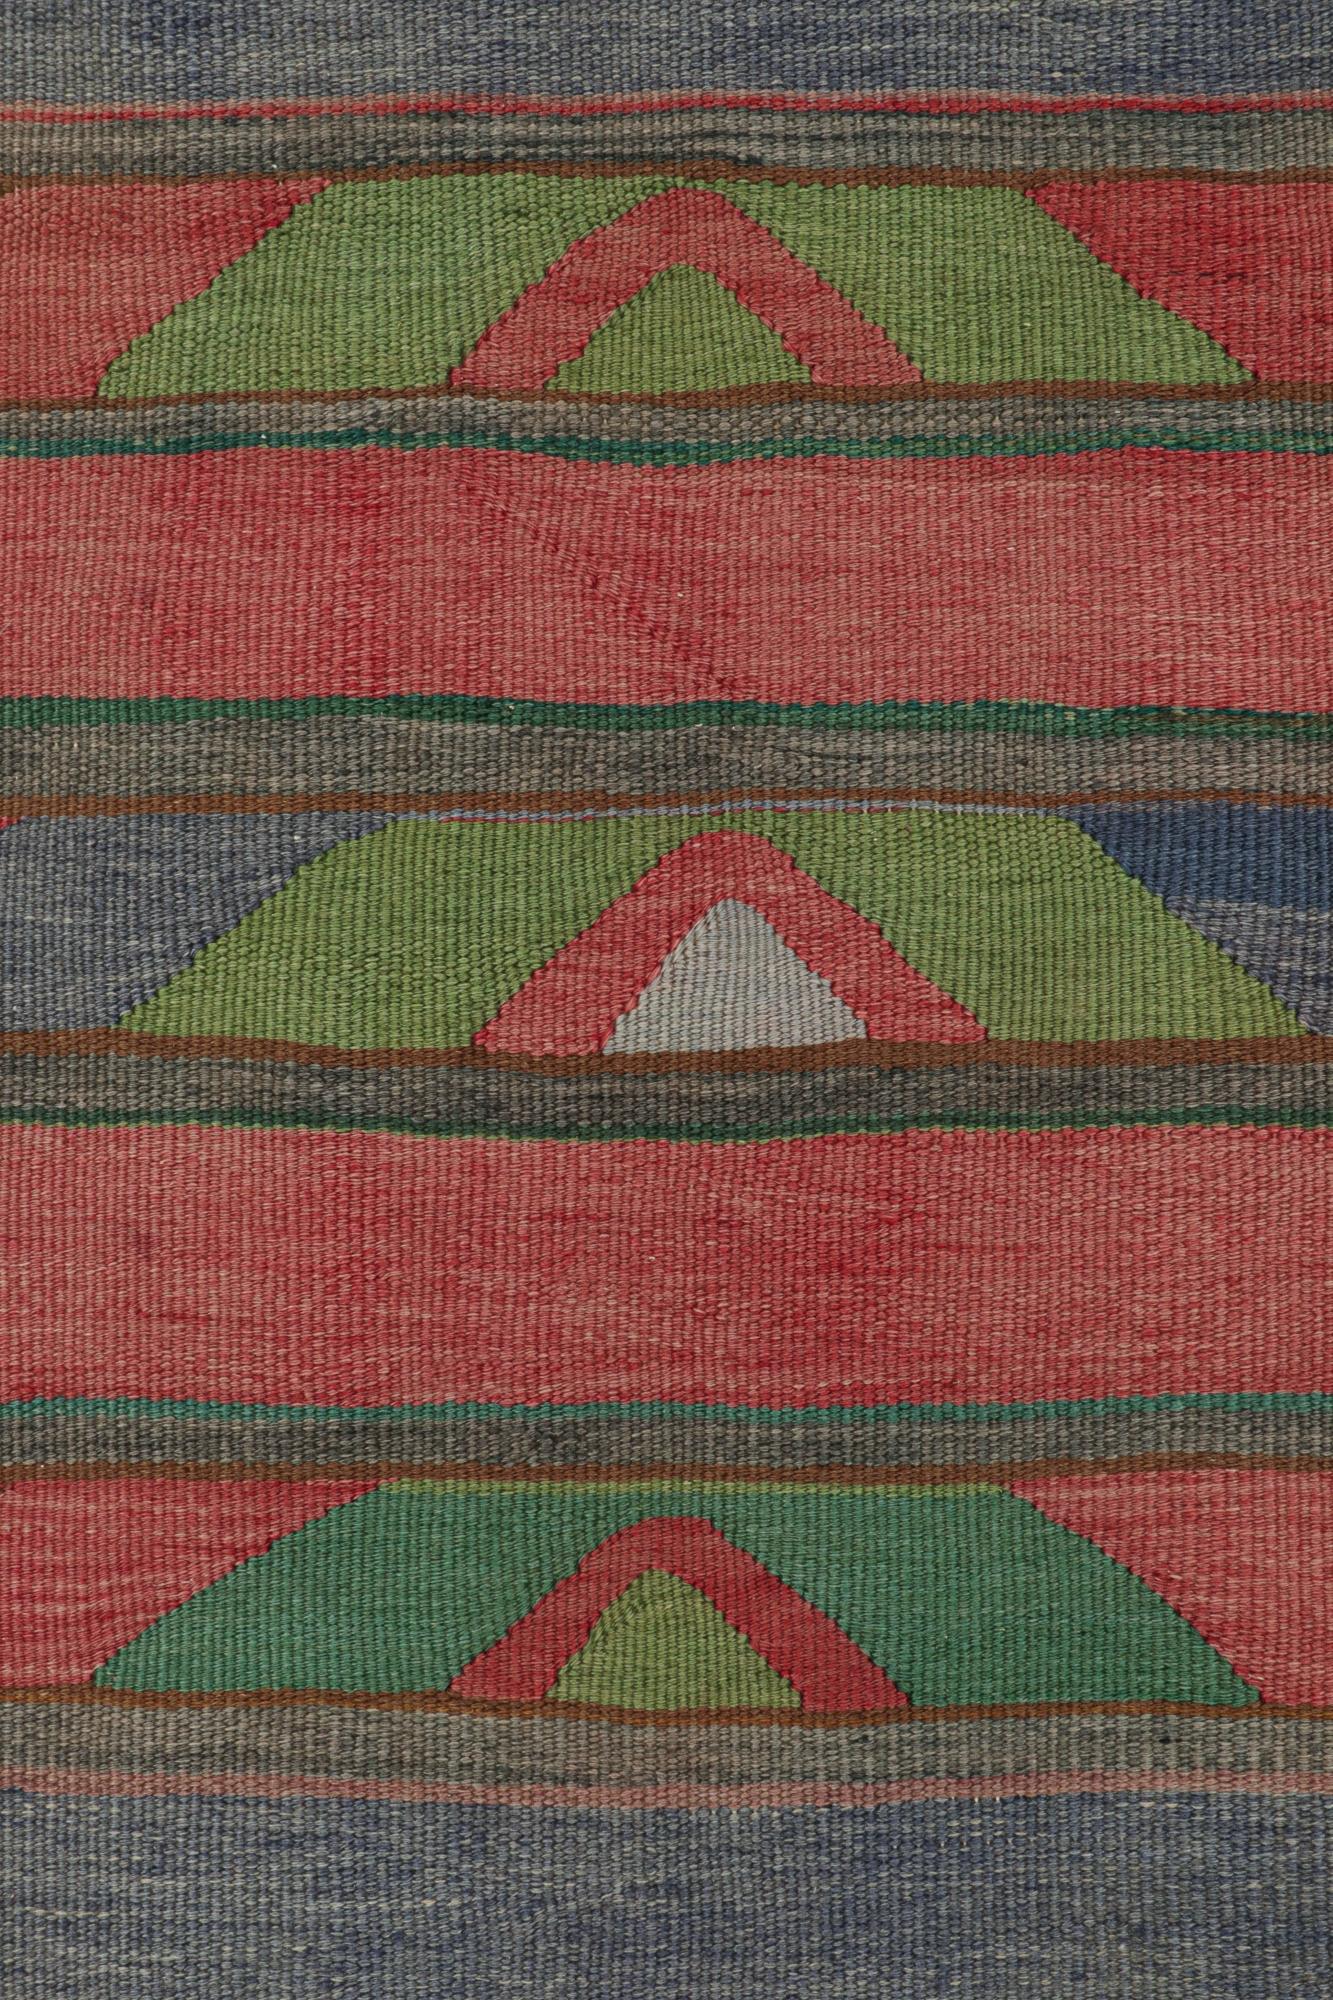 Tribal Vintage Persian Bidjar Kilim in Red, Blue and Green Geometric Patterns For Sale